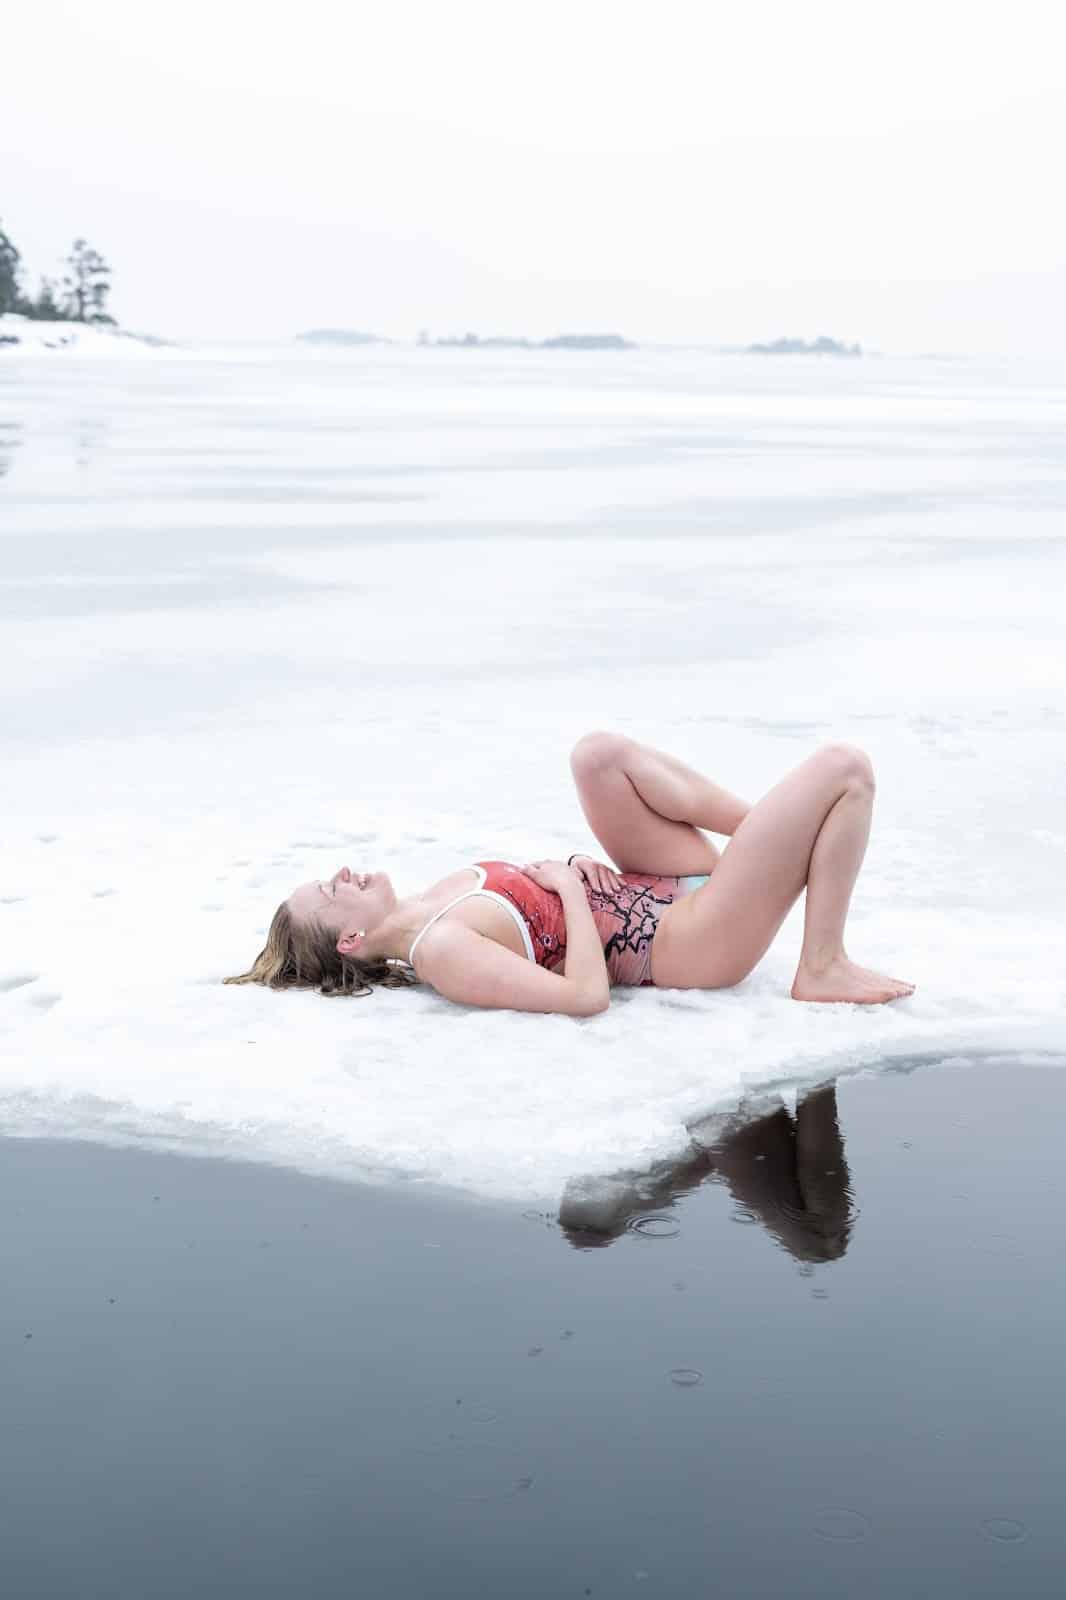 Finlândia Banhos de gelo